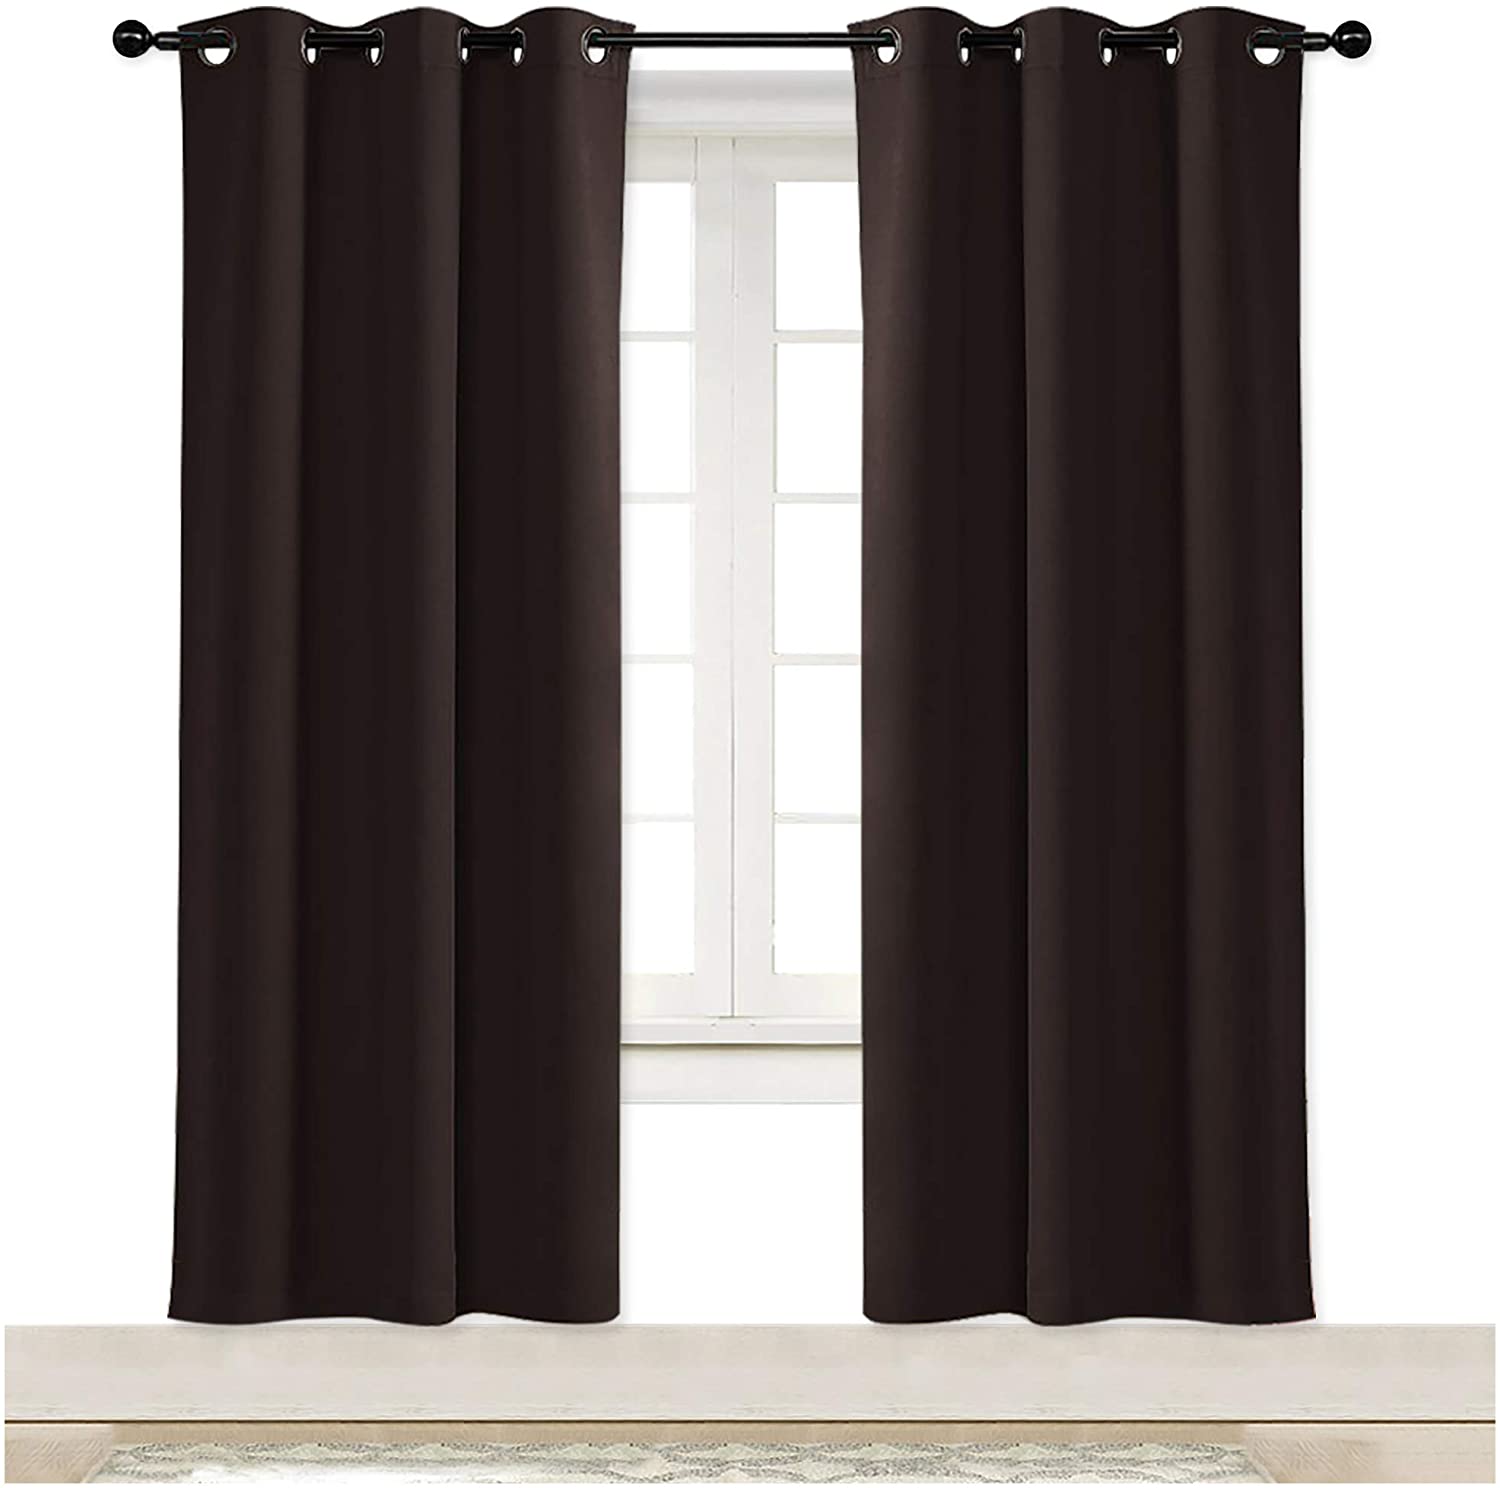 NICETOWN Closet Curtains Sound Blocking, Bedroom Privacy Room Divider Curtain Sc Limitowana edycja nowość